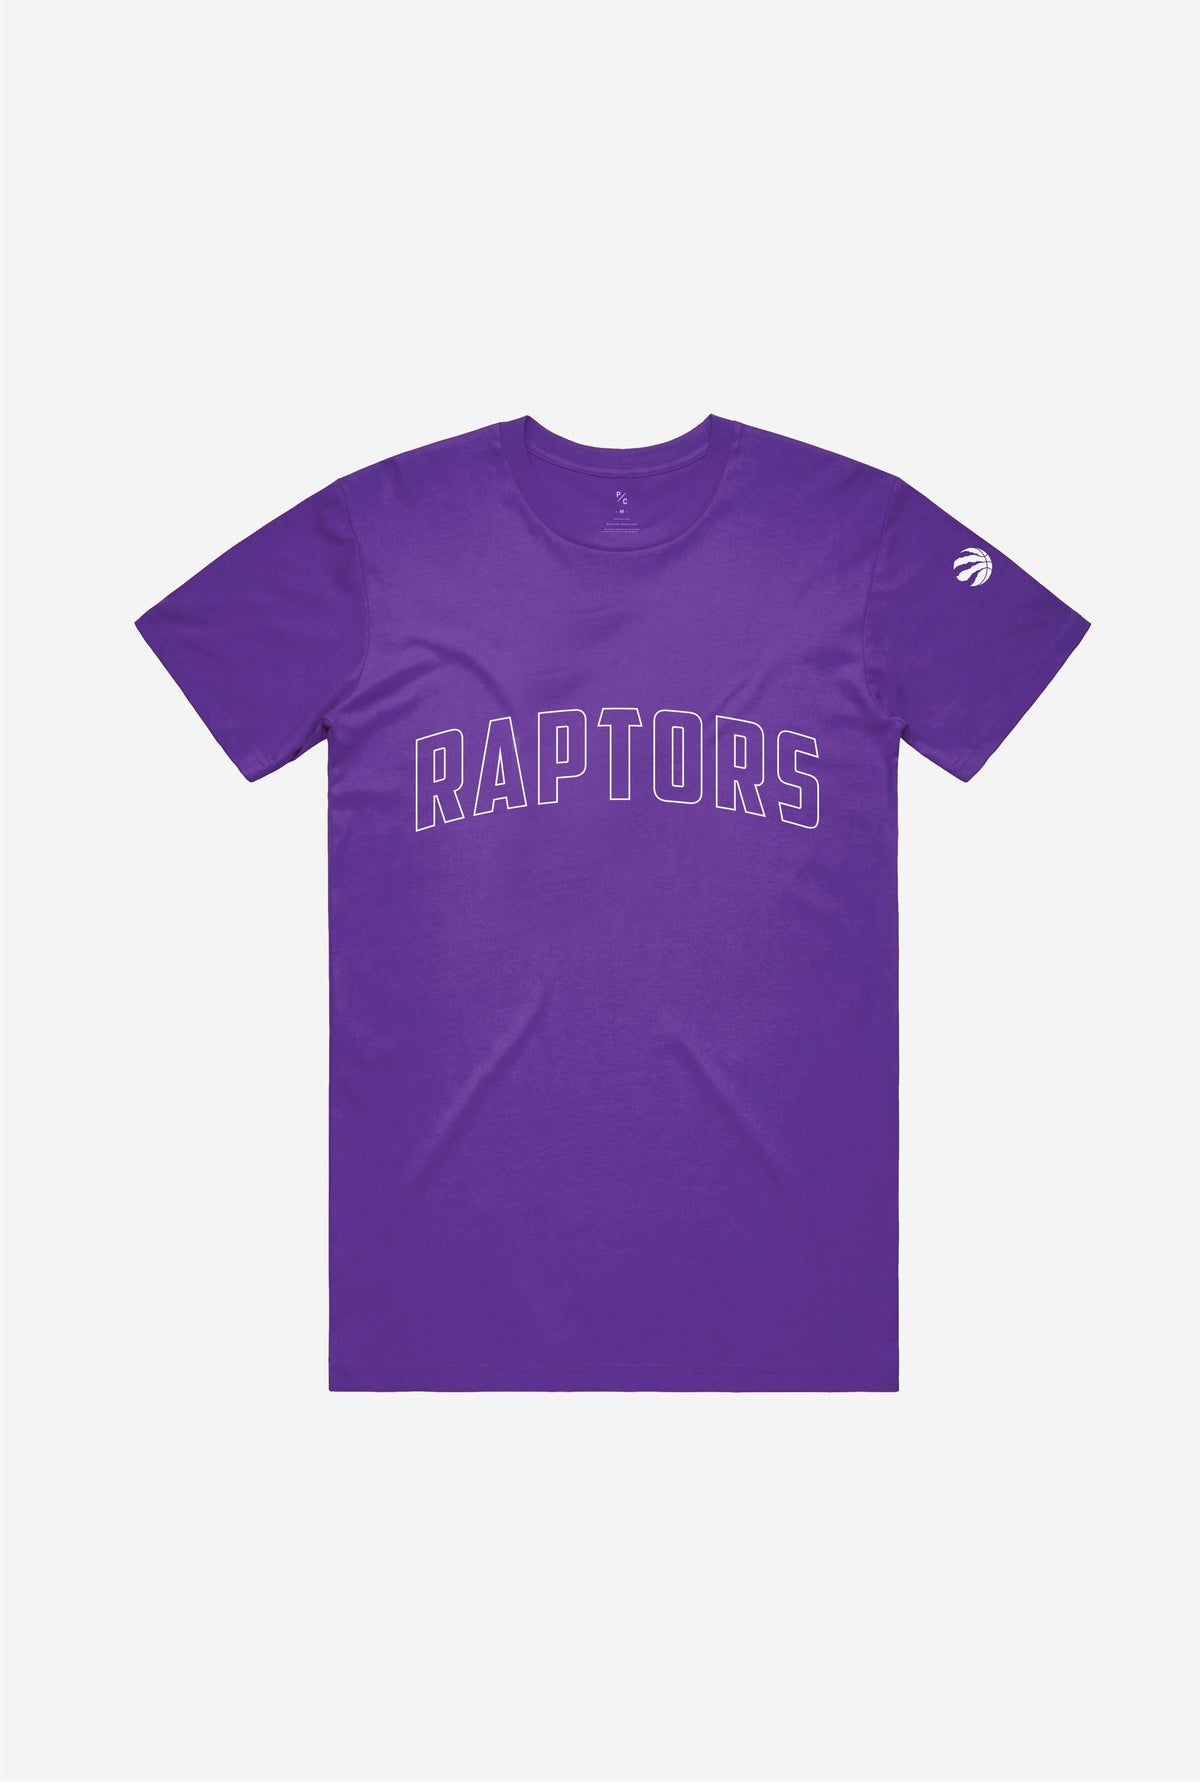 Toronto Raptors T-Shirt - Purple